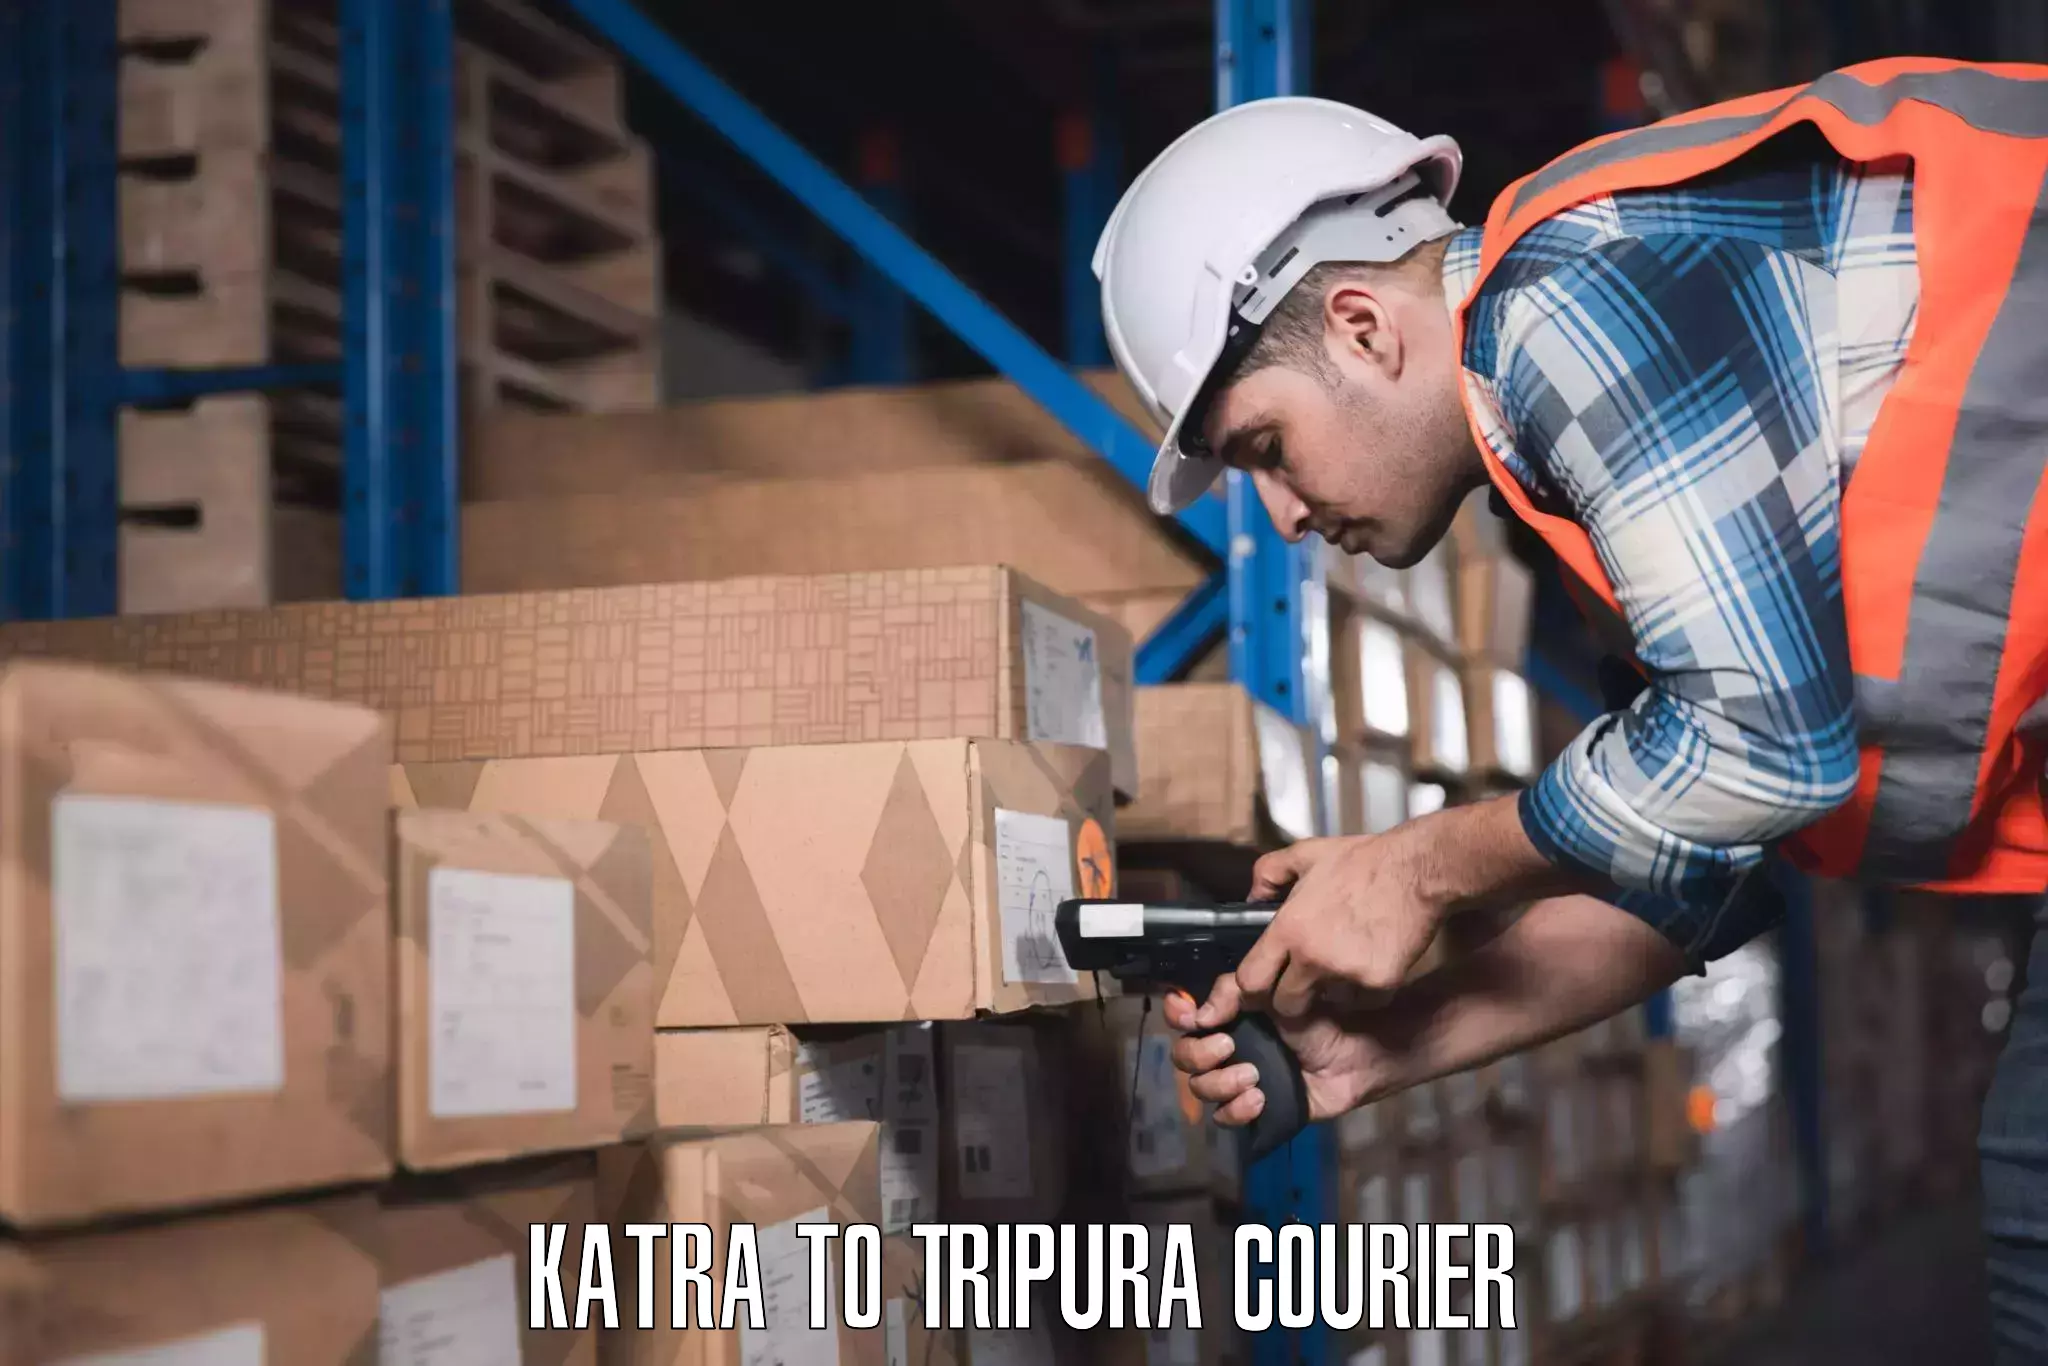 Luggage shipment specialists Katra to Tripura